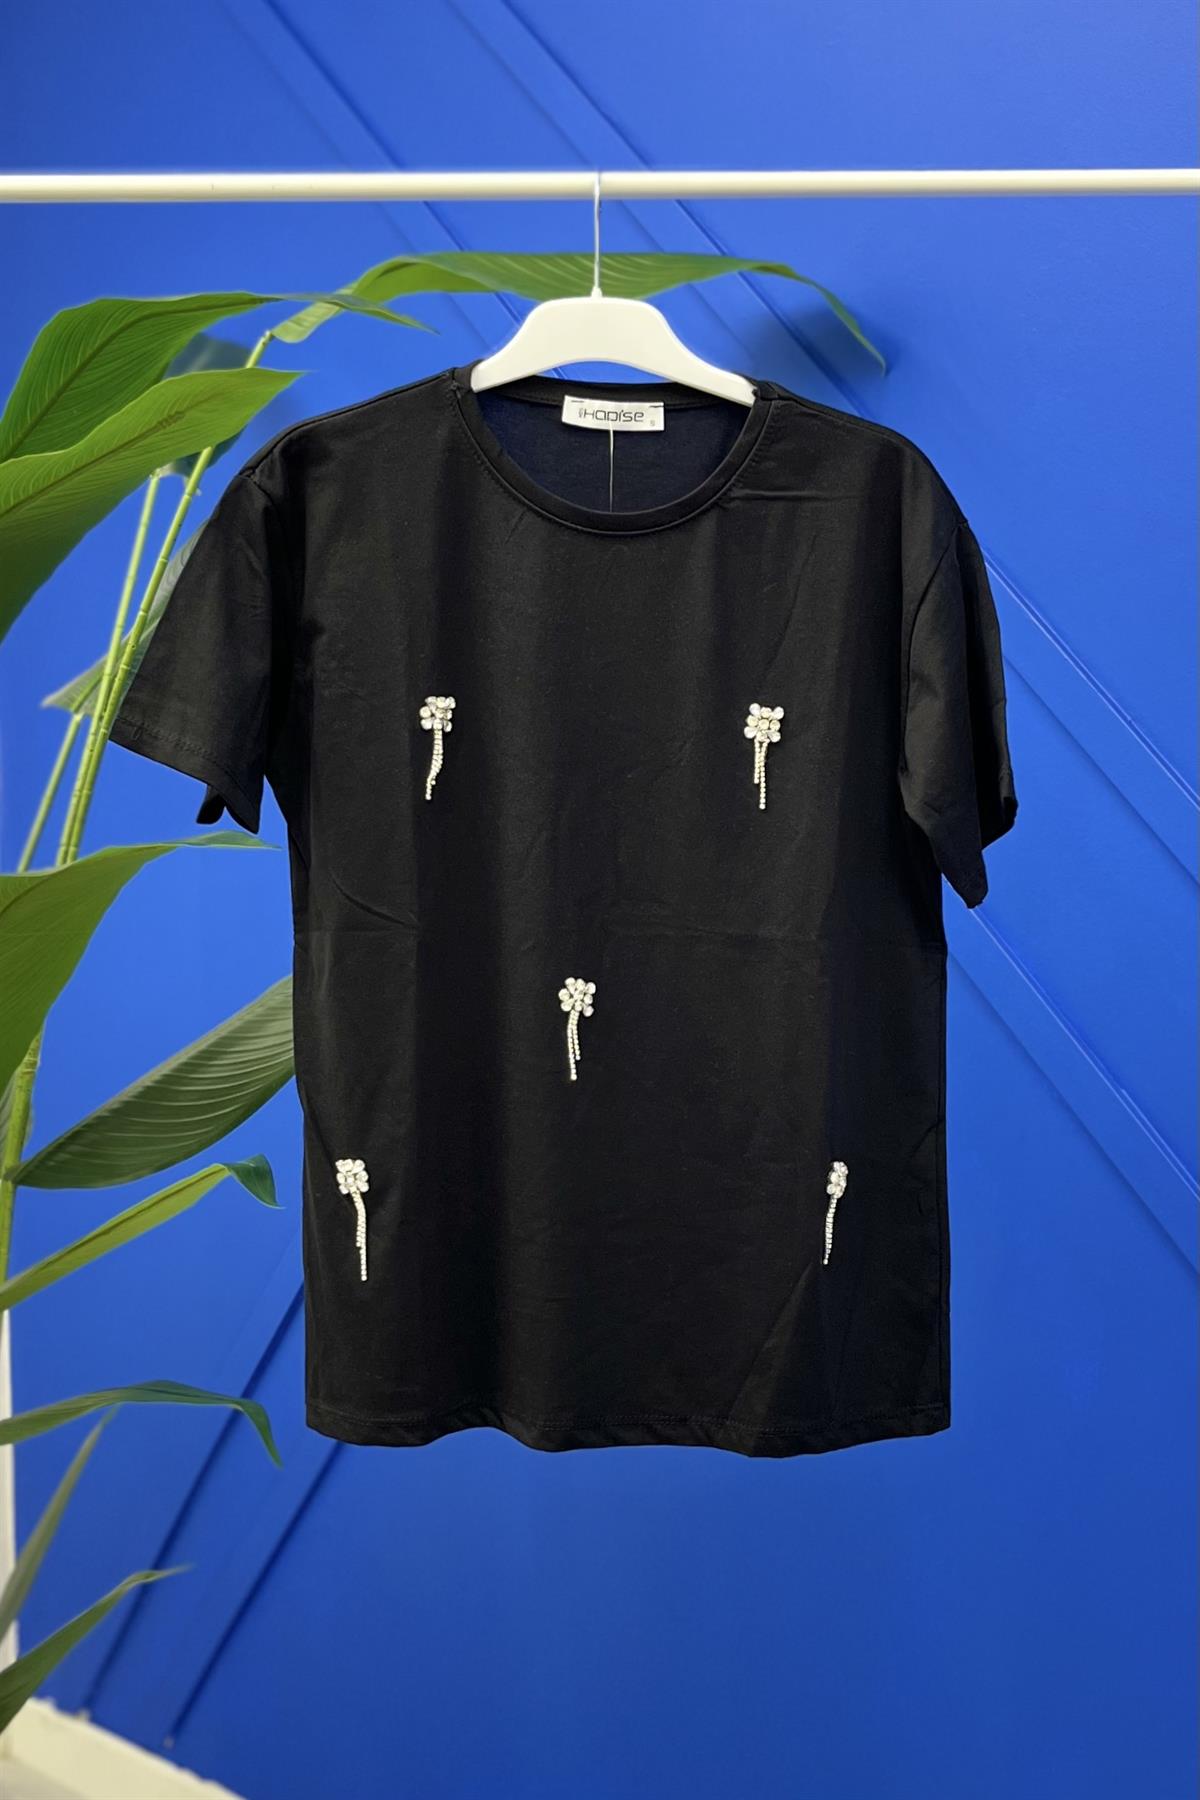 Çiçek Taşlı Tshirt 1677 - Siyah T-shirt HADİSE Bilen Giyim